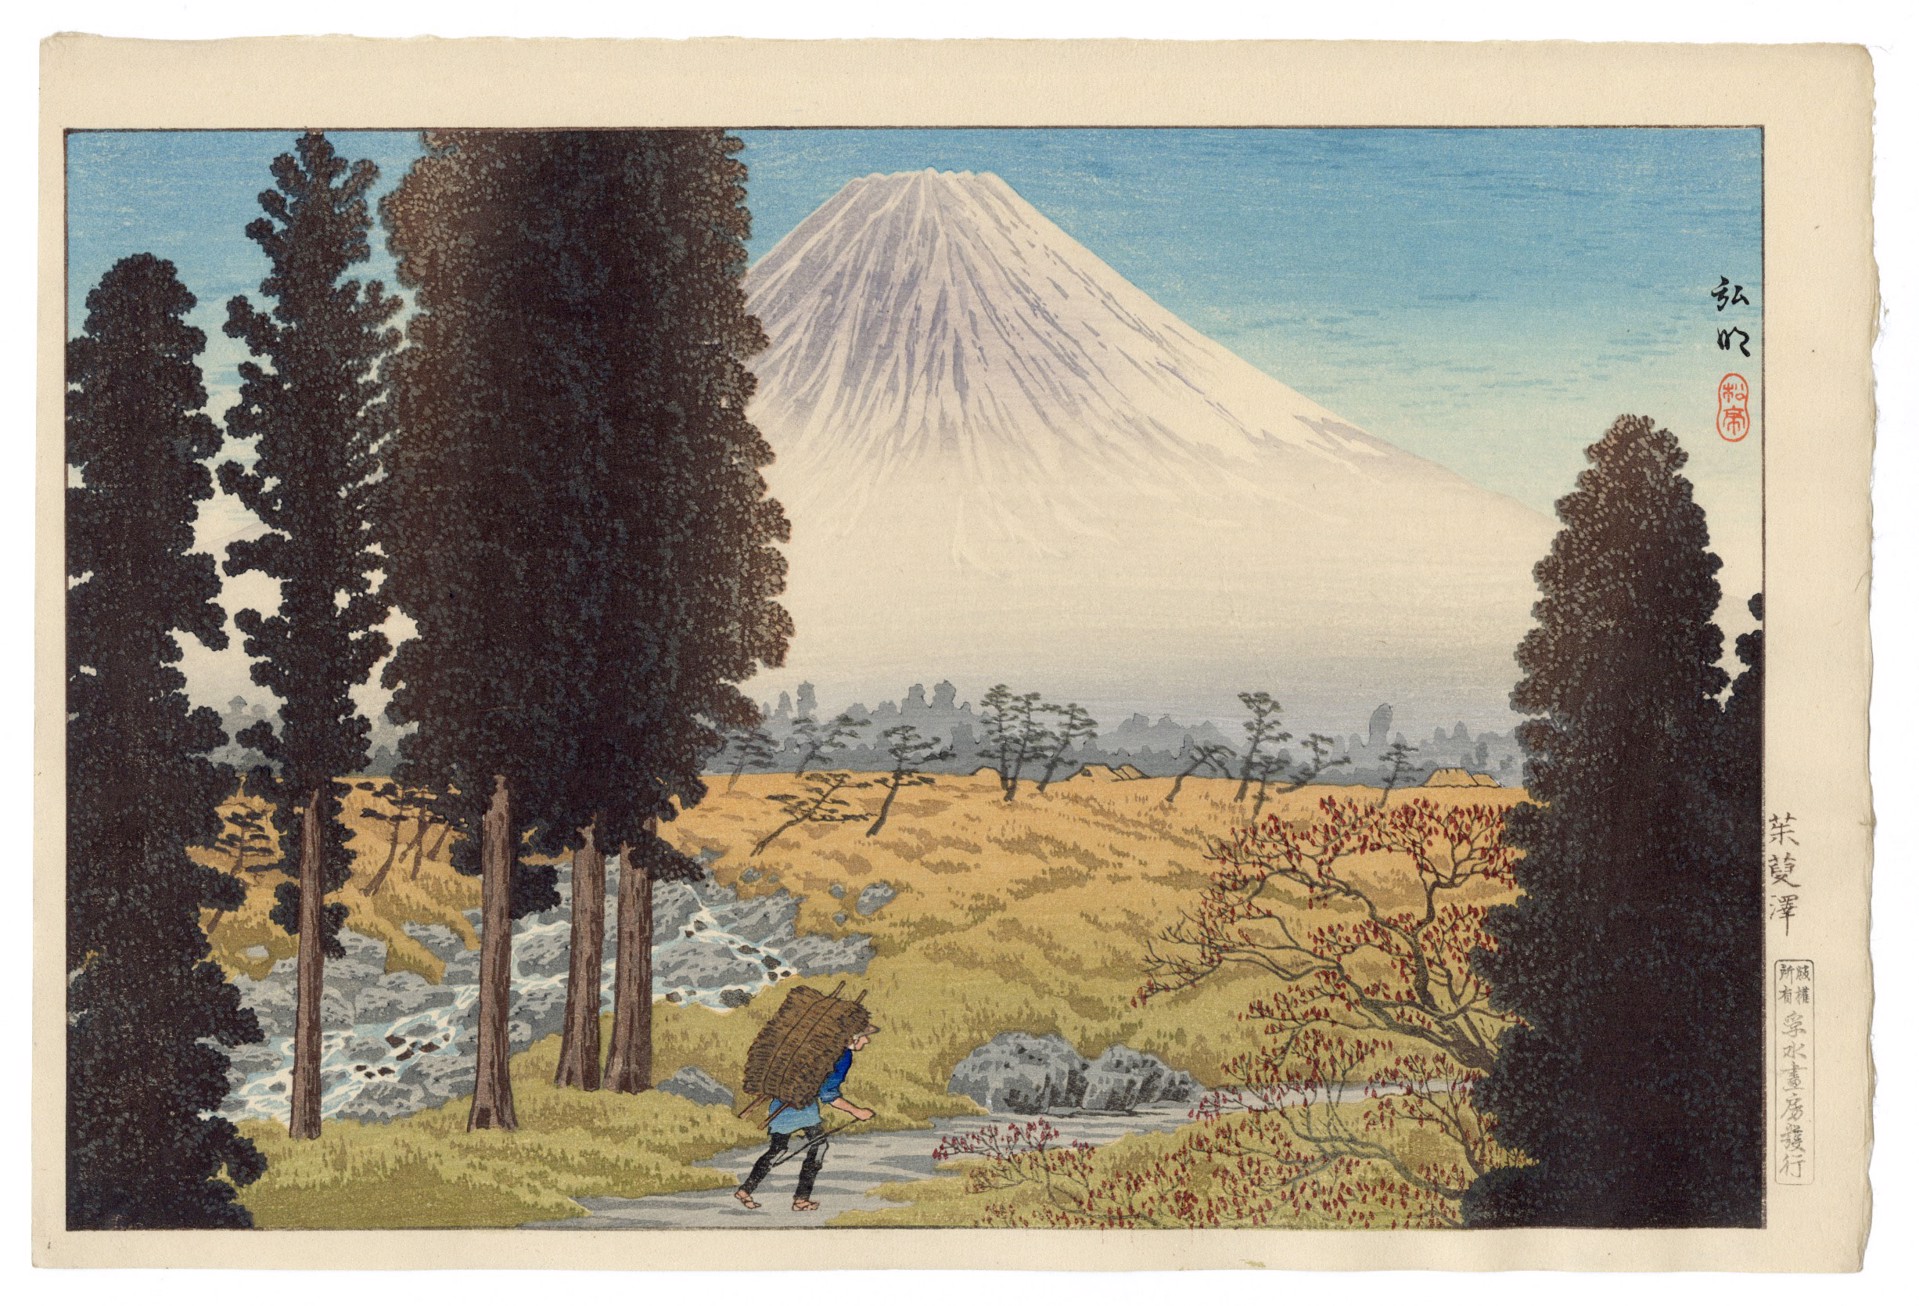 Takahashi Hiroaki (Shōtei) 高橋弘明 (松亭) (1871-1944), Mount Fuji from Gumizawa (茱萸沢), December 1929, Hotei Japanese Prints, Leiden